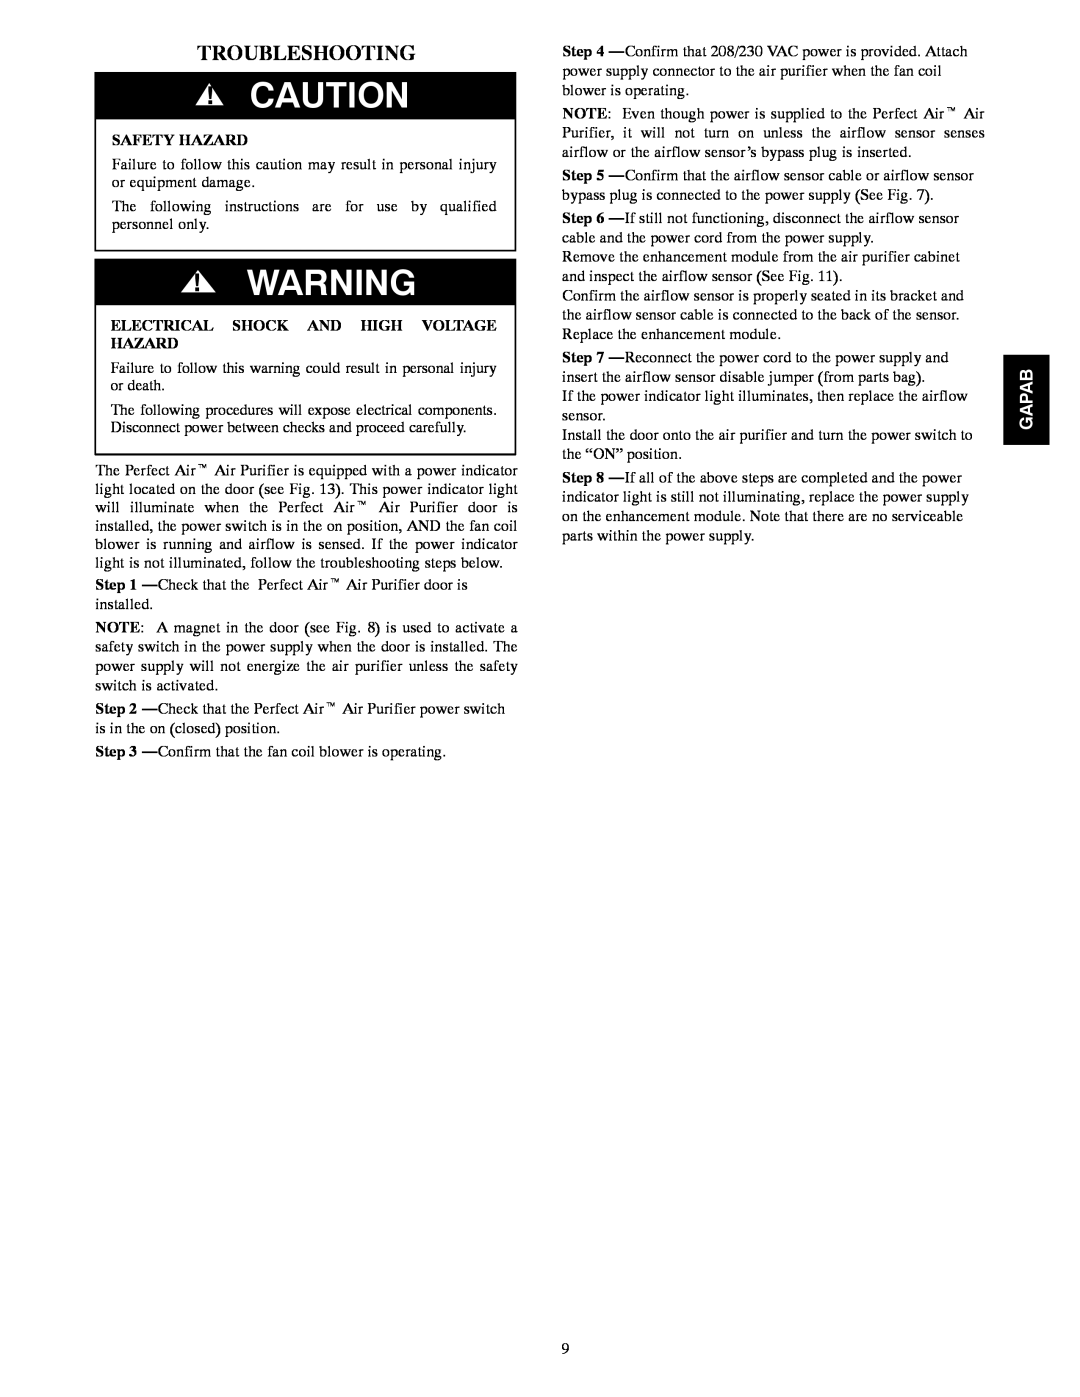 Bryant 2420, 1620, 2020 Troubleshooting, Safety Hazard, Gapab, Electrical Shock And High Voltage Hazard 